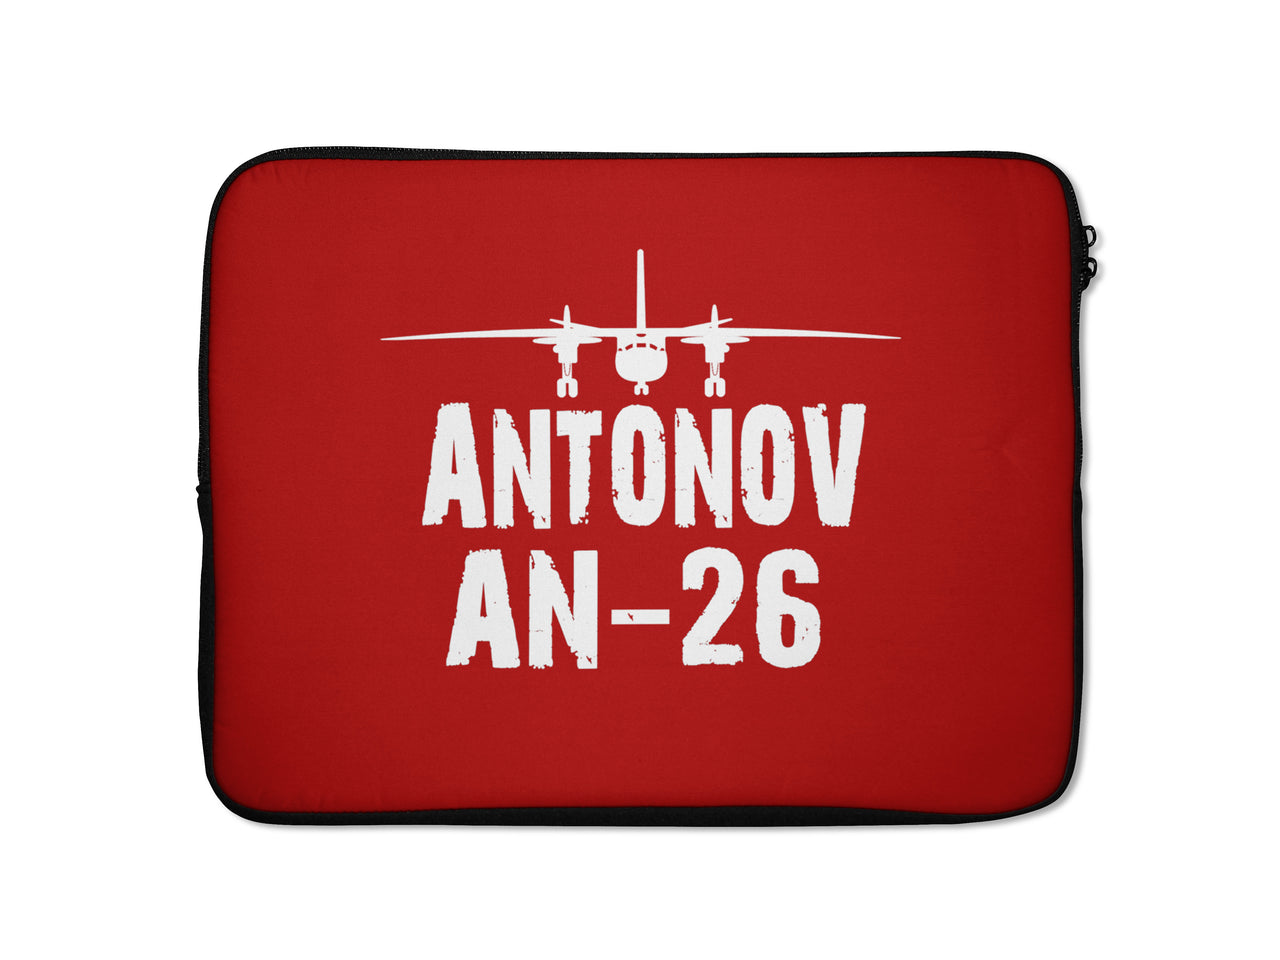 Antonov AN-26 & Plane Designed Laptop & Tablet Cases